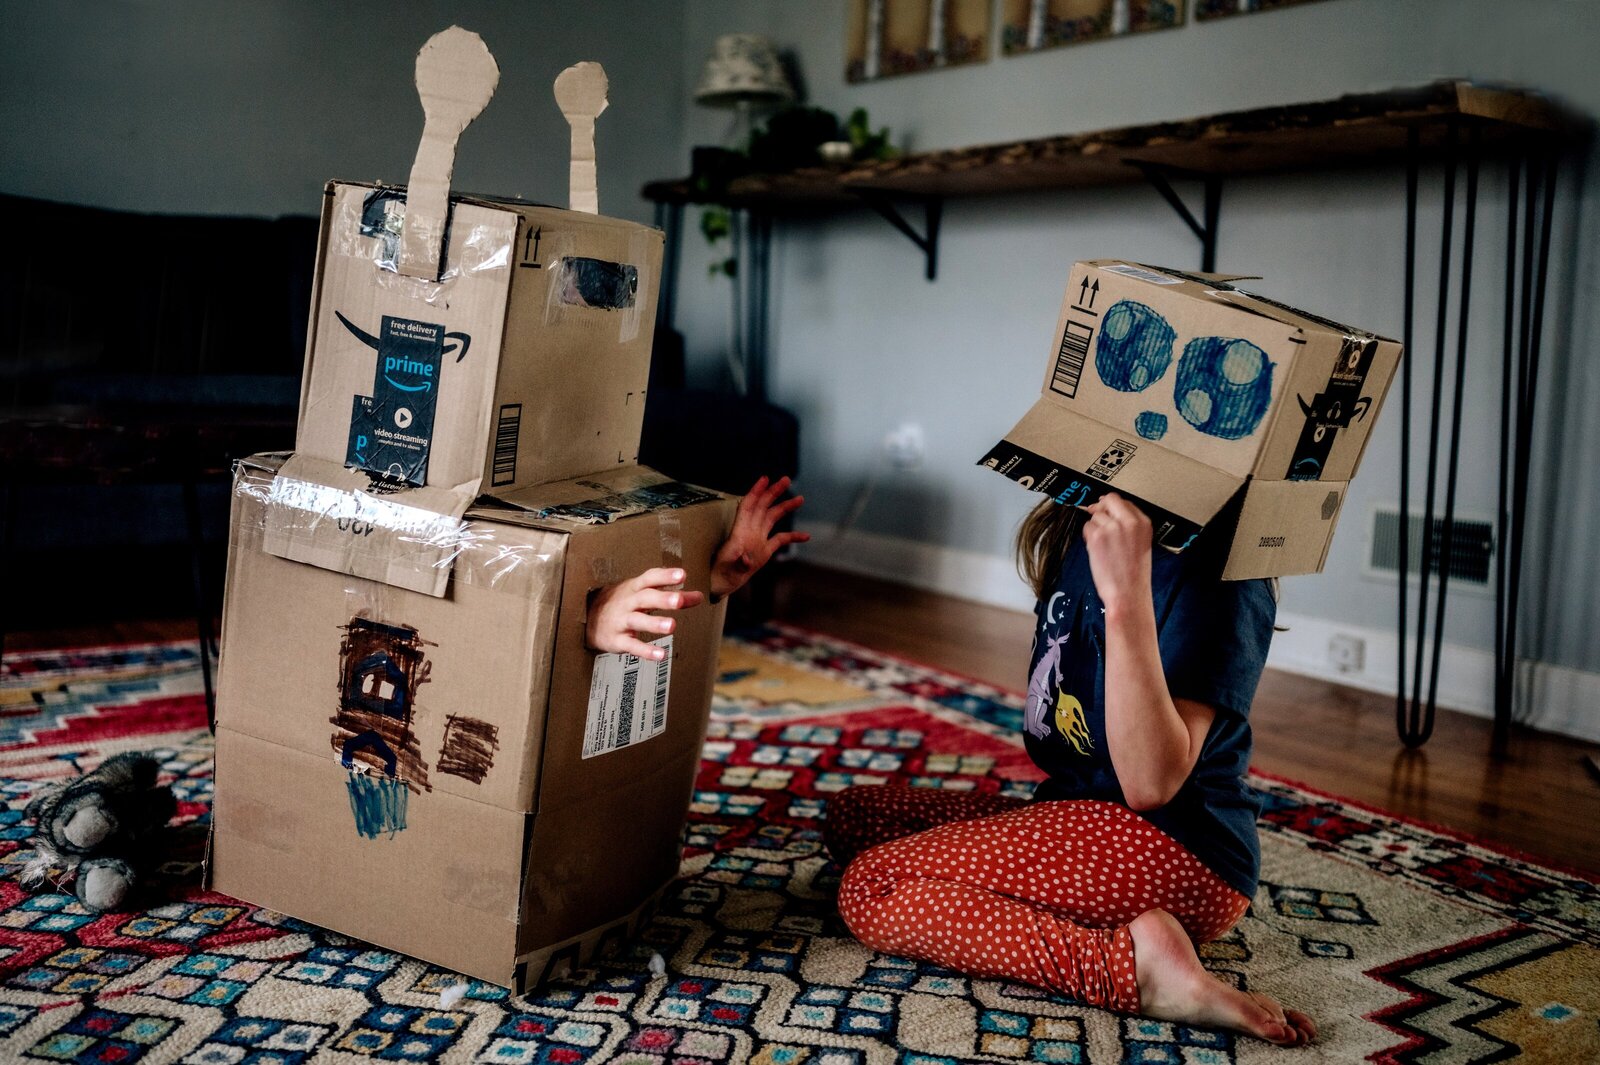 Robot kids living room